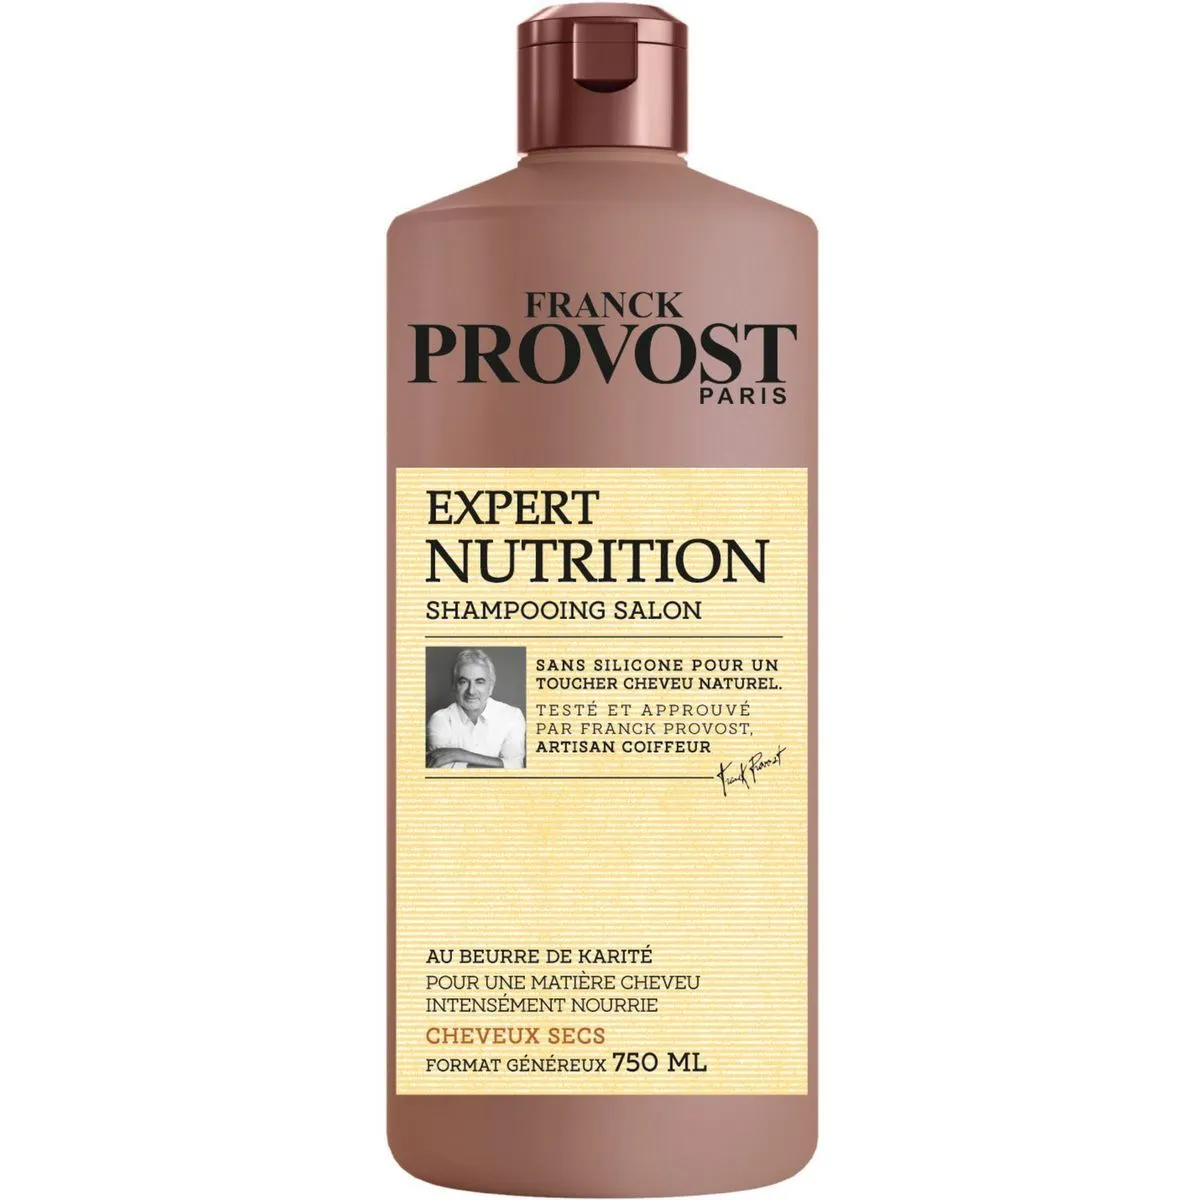 shampooing expert nutrition franck provost